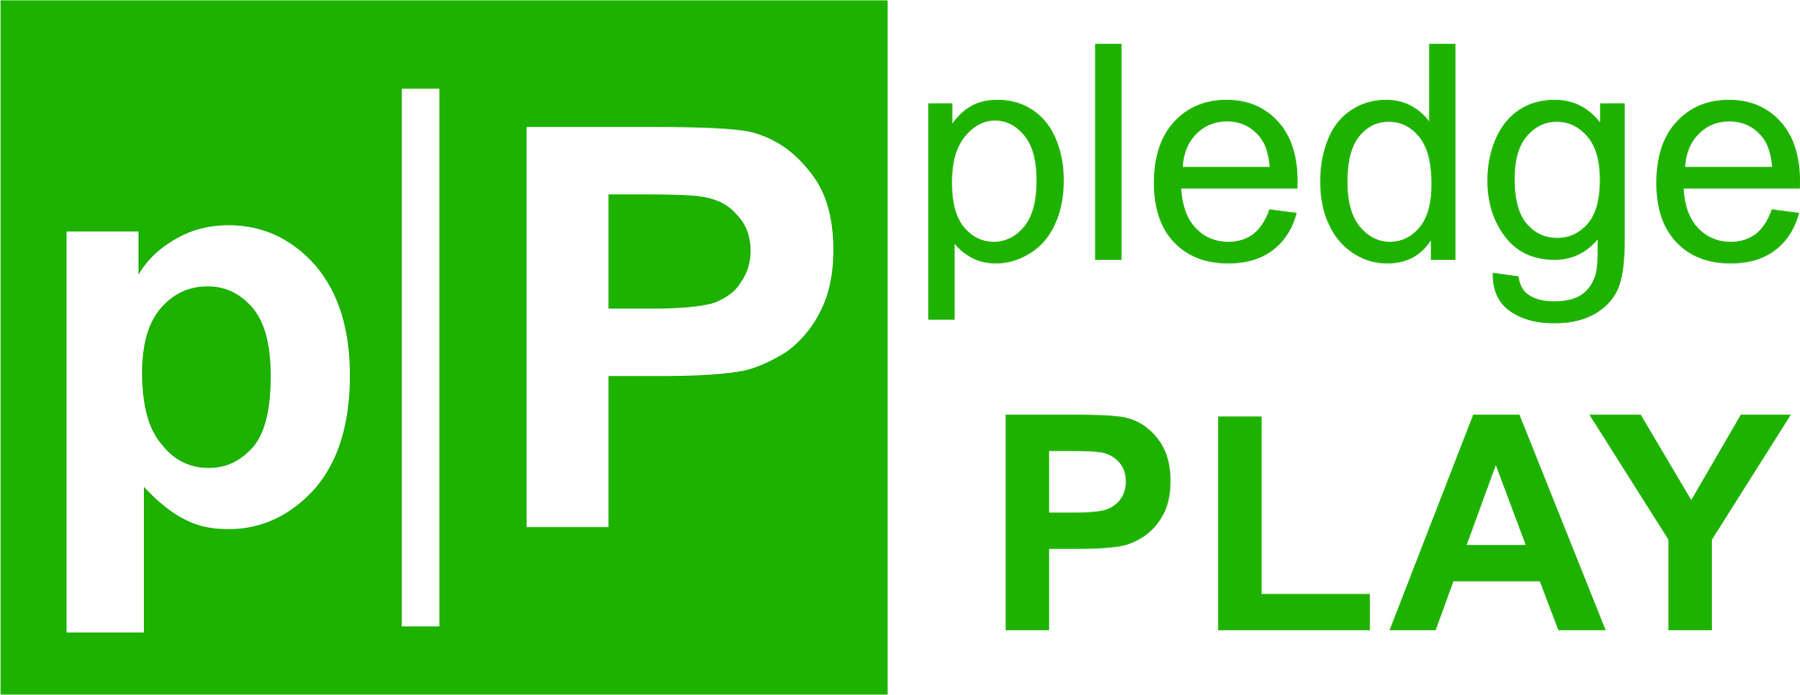 pledge and PLAY logo